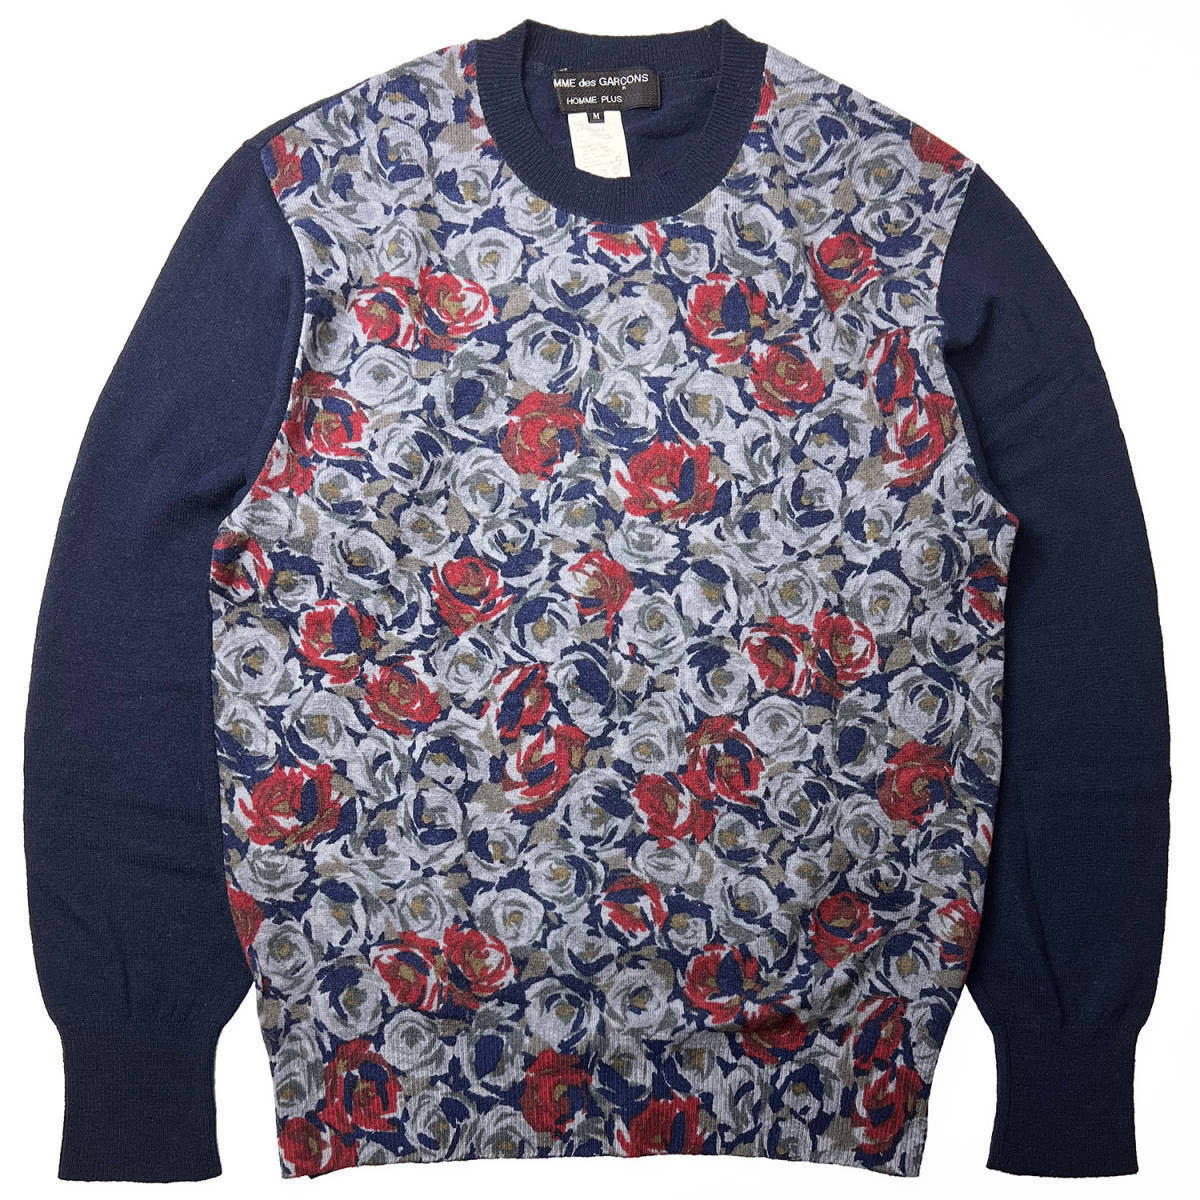 88AW 薔薇 花柄 ニットセーター コムデギャルソンオムプリュス HOMME PLUS 1988AW Vintage Archive Rose Pattern Knit Sweater Floral